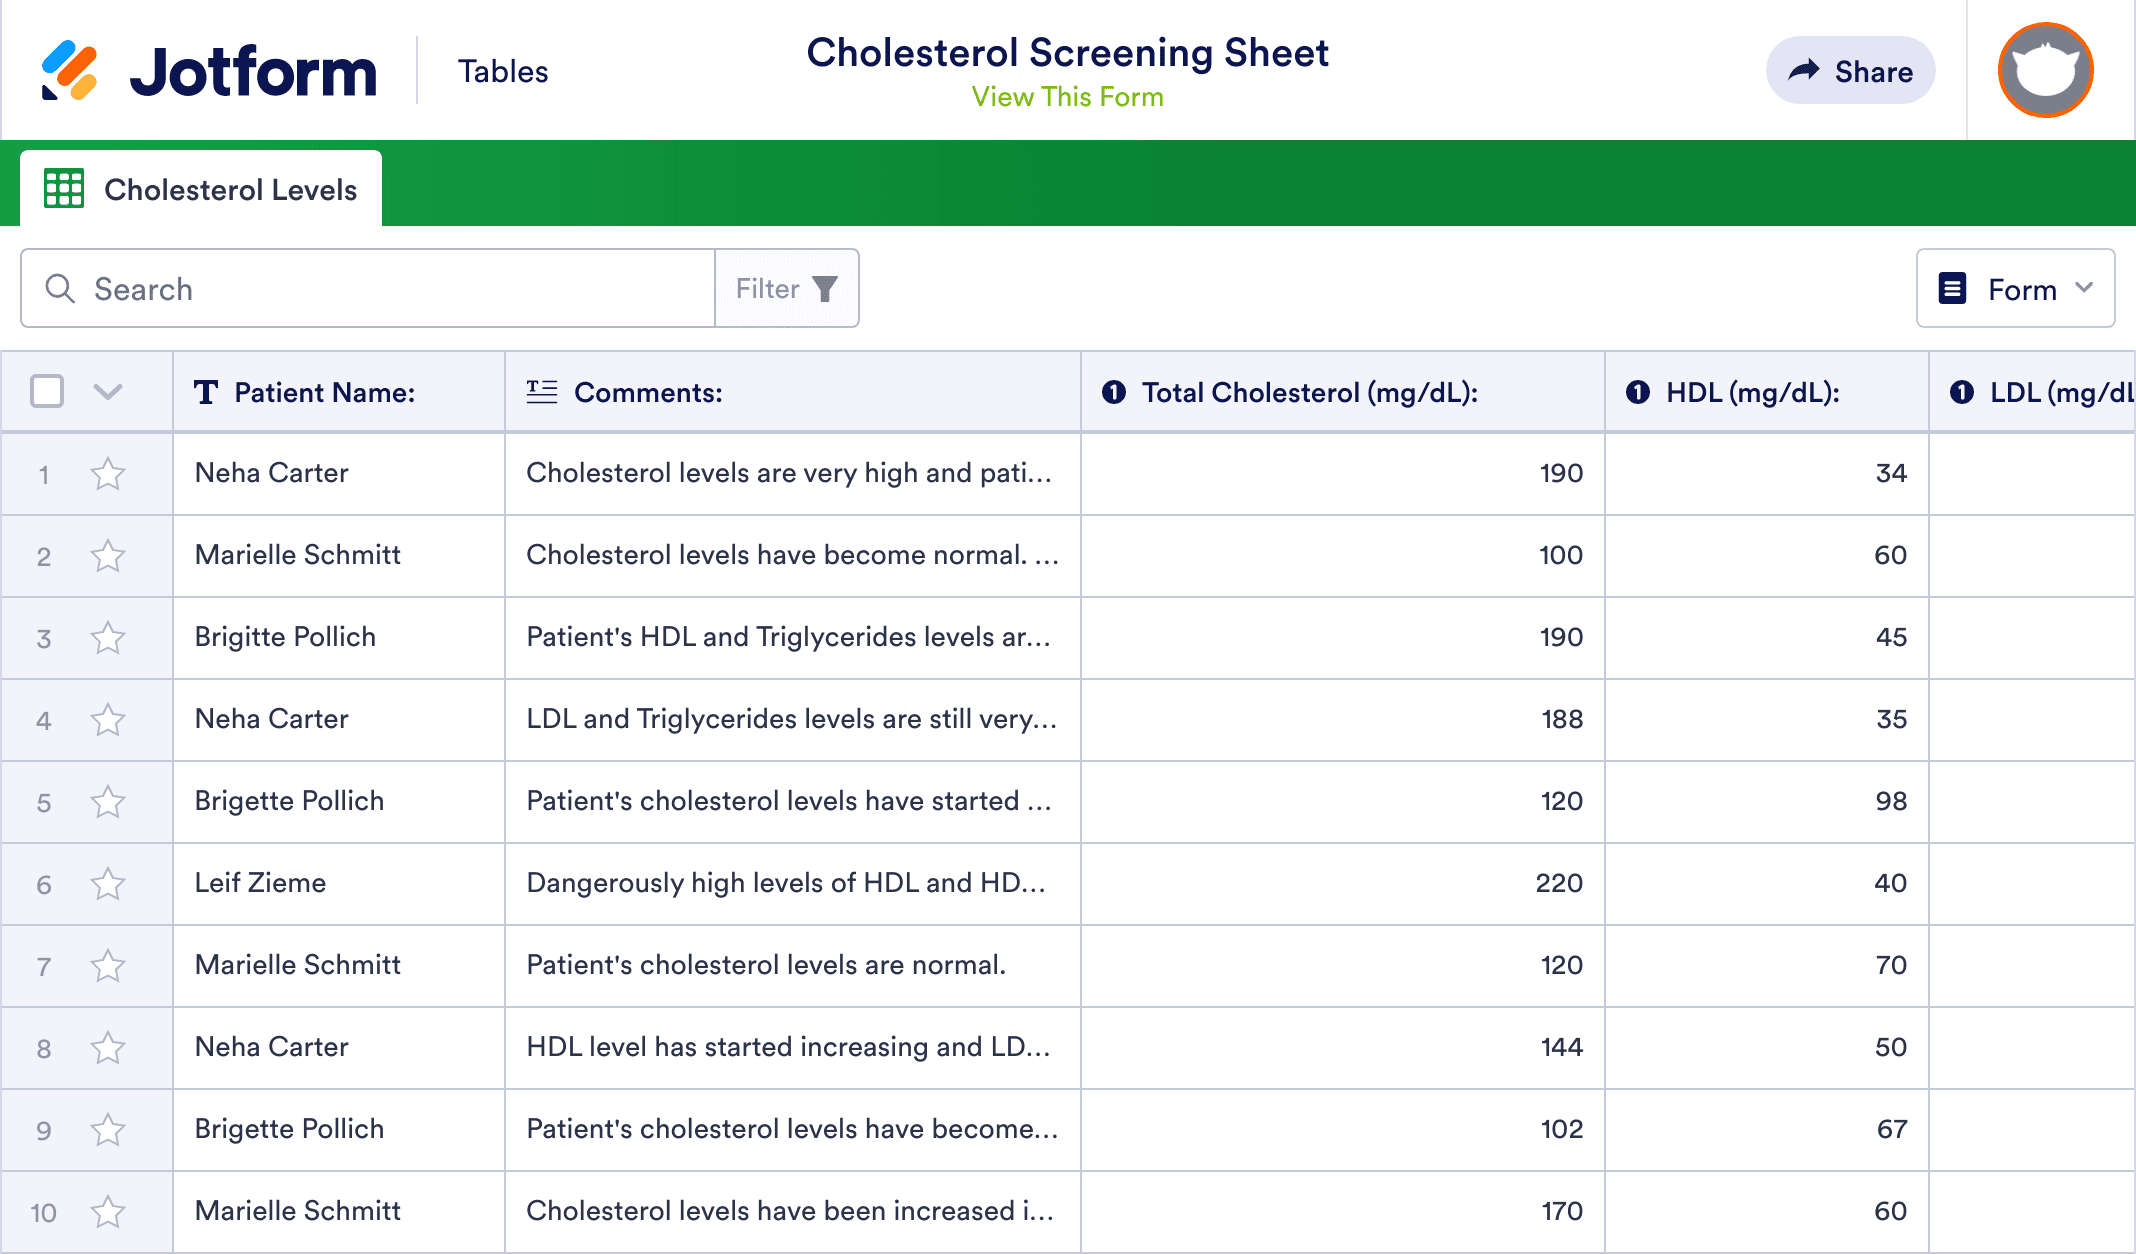 Cholesterol Screening Sheet